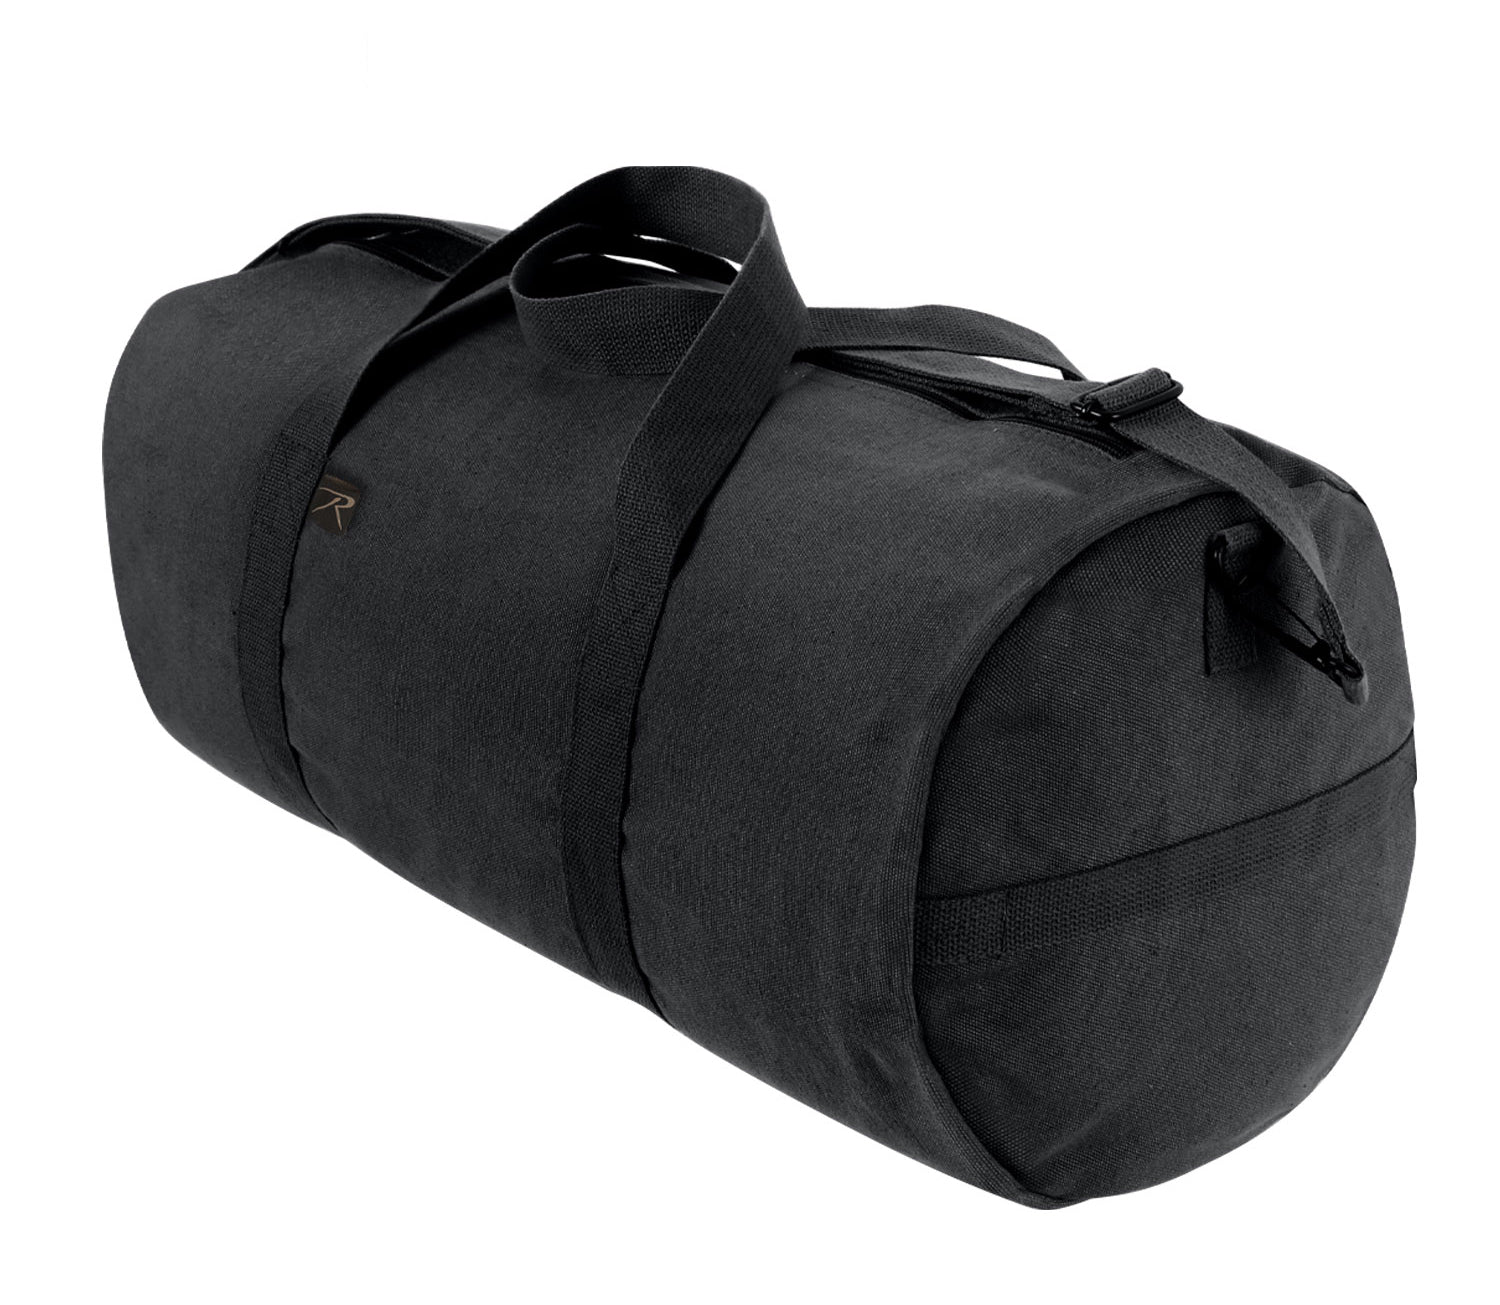  Rothco Canvas Urban Explorer Bag, Black : Clothing